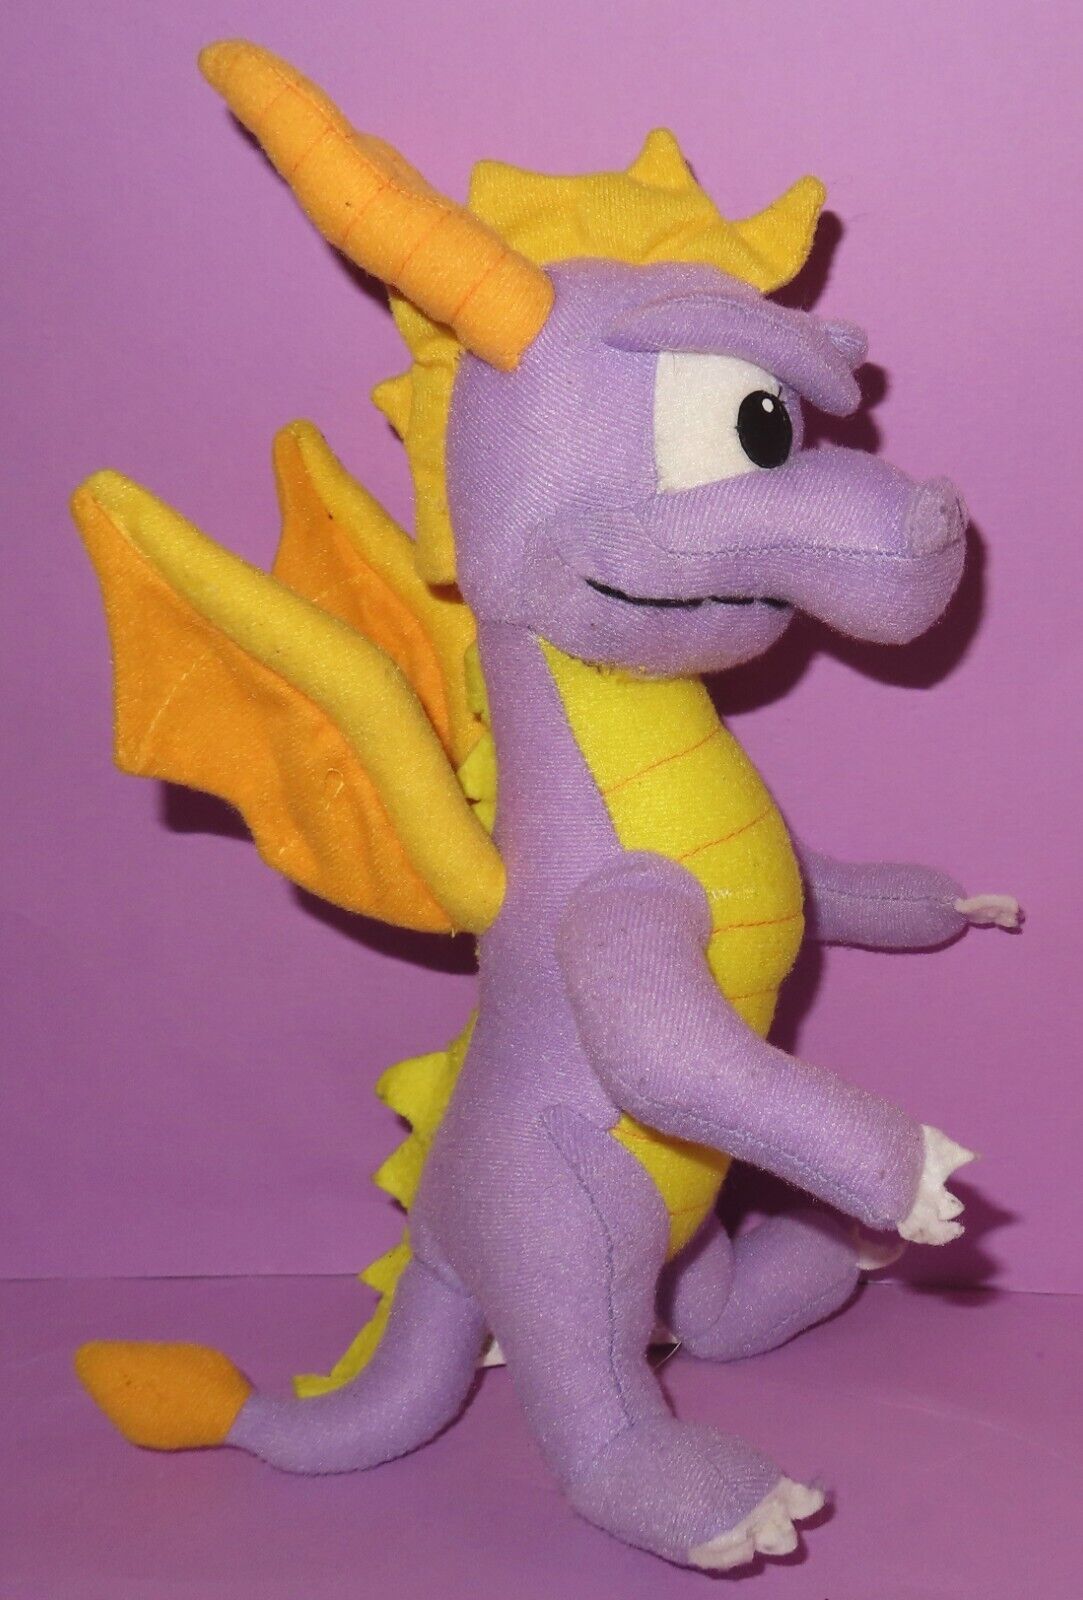 Spyro the Dragon Plush Play By Play 2001 Universal Studios Playstation - $25.00